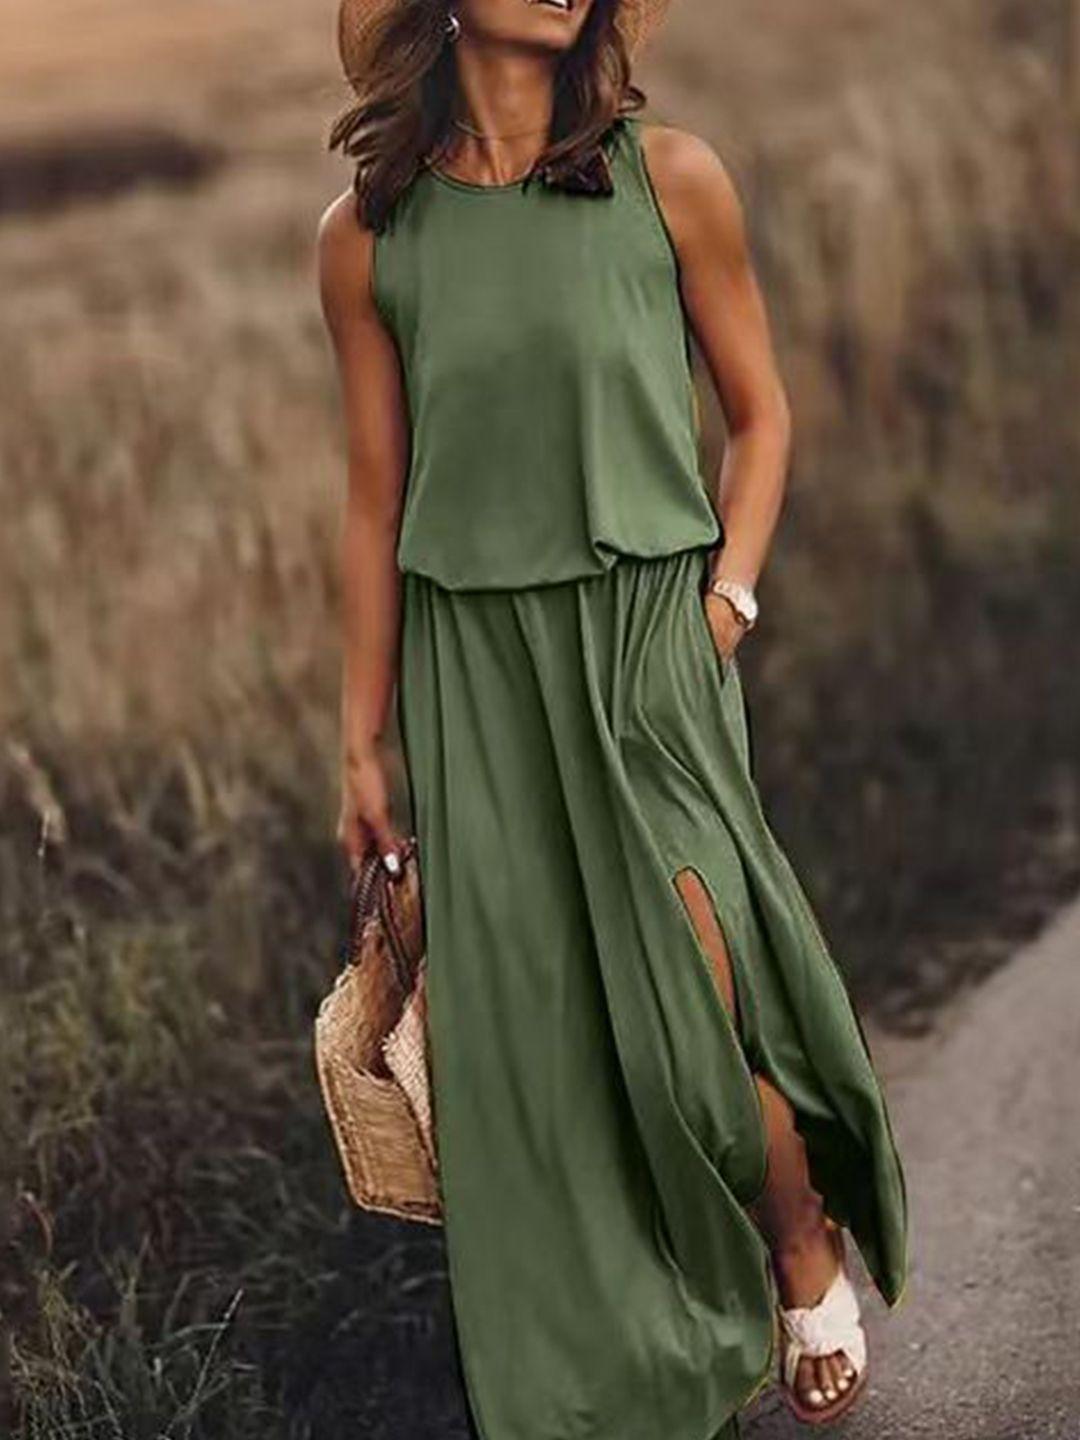 stylecast olive green round neck sleeveless blouson maxi dress